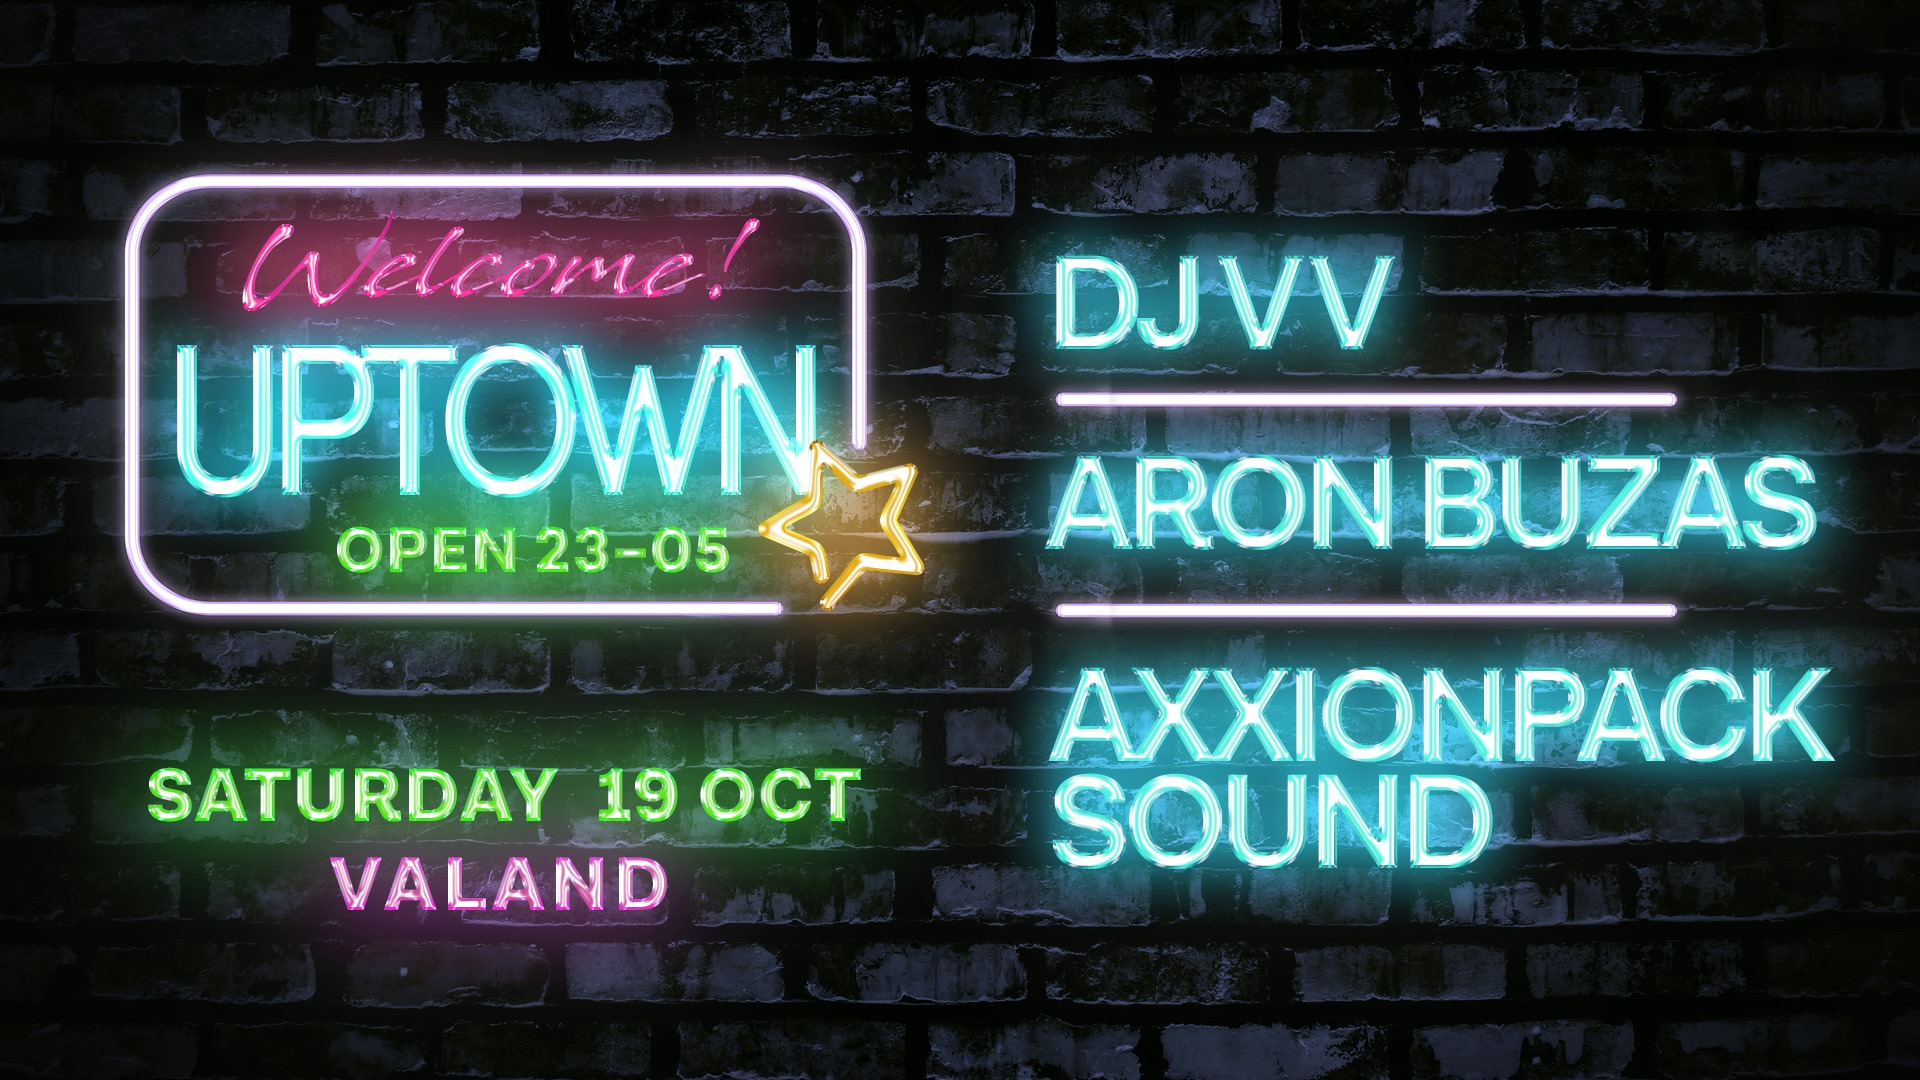 KLUBB: Uptown feat DJ VV, Aron Buzas & Axxionpack Sound (GÖTEBORG!)